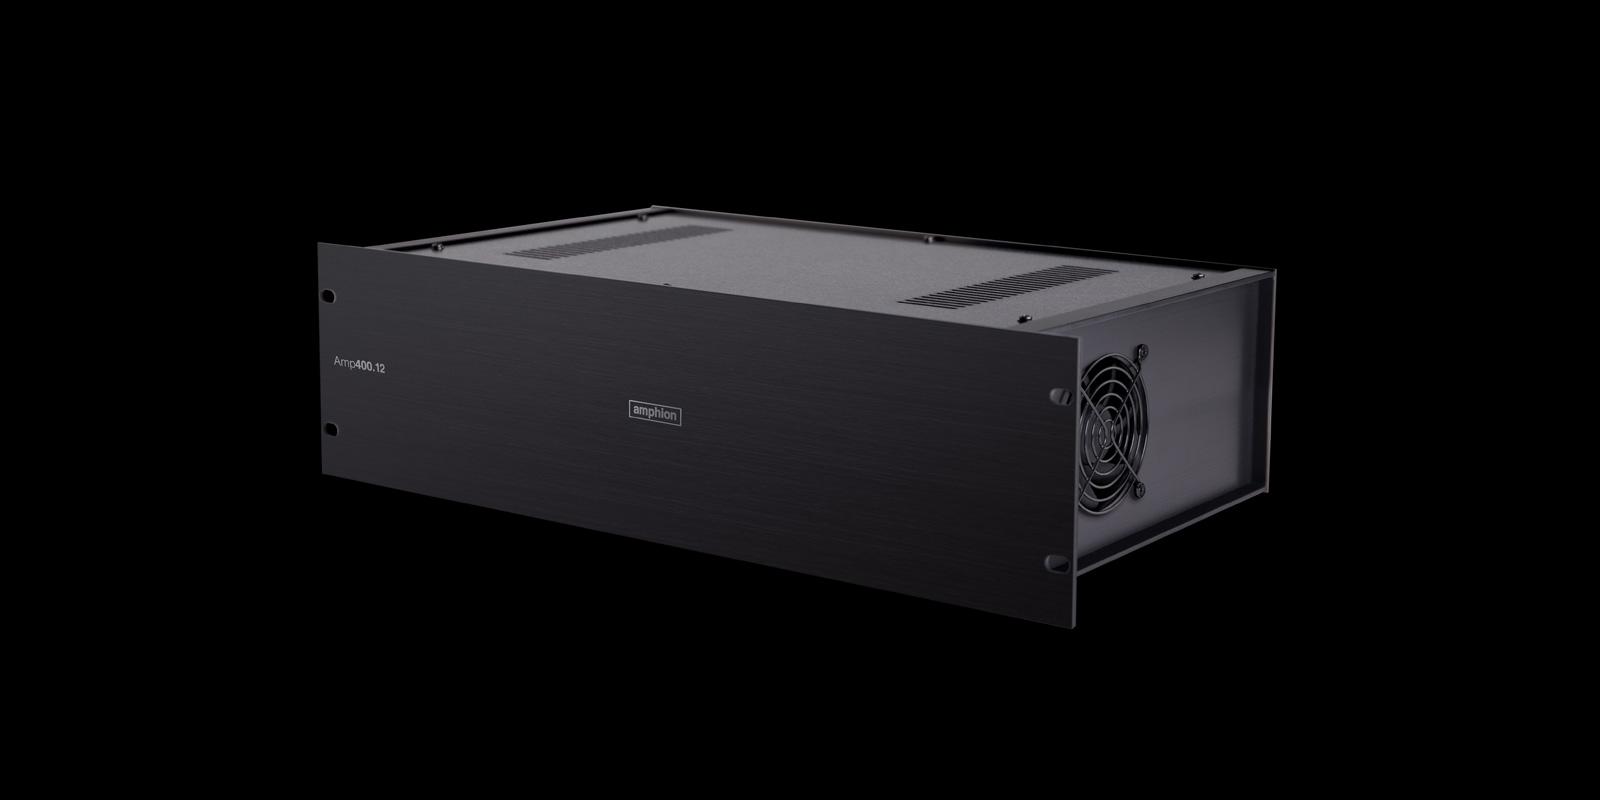 Amphion’s Latest Atmos Solution: Amp400.12 Multi-Channel Power Amplifier